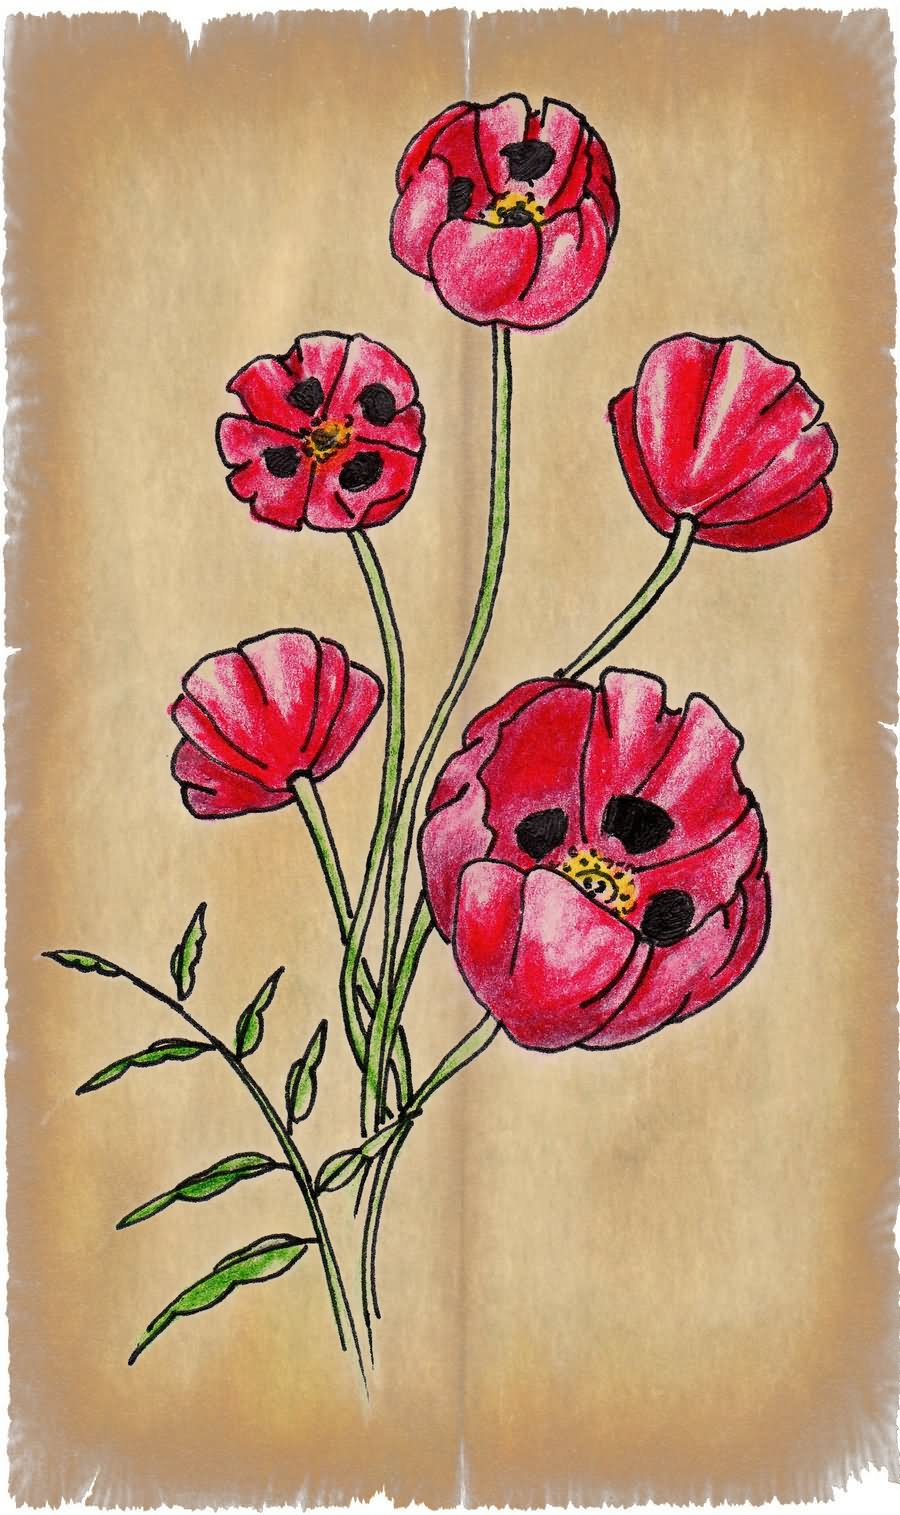 Poppy Flowers Tattoo Design By Ben Wright